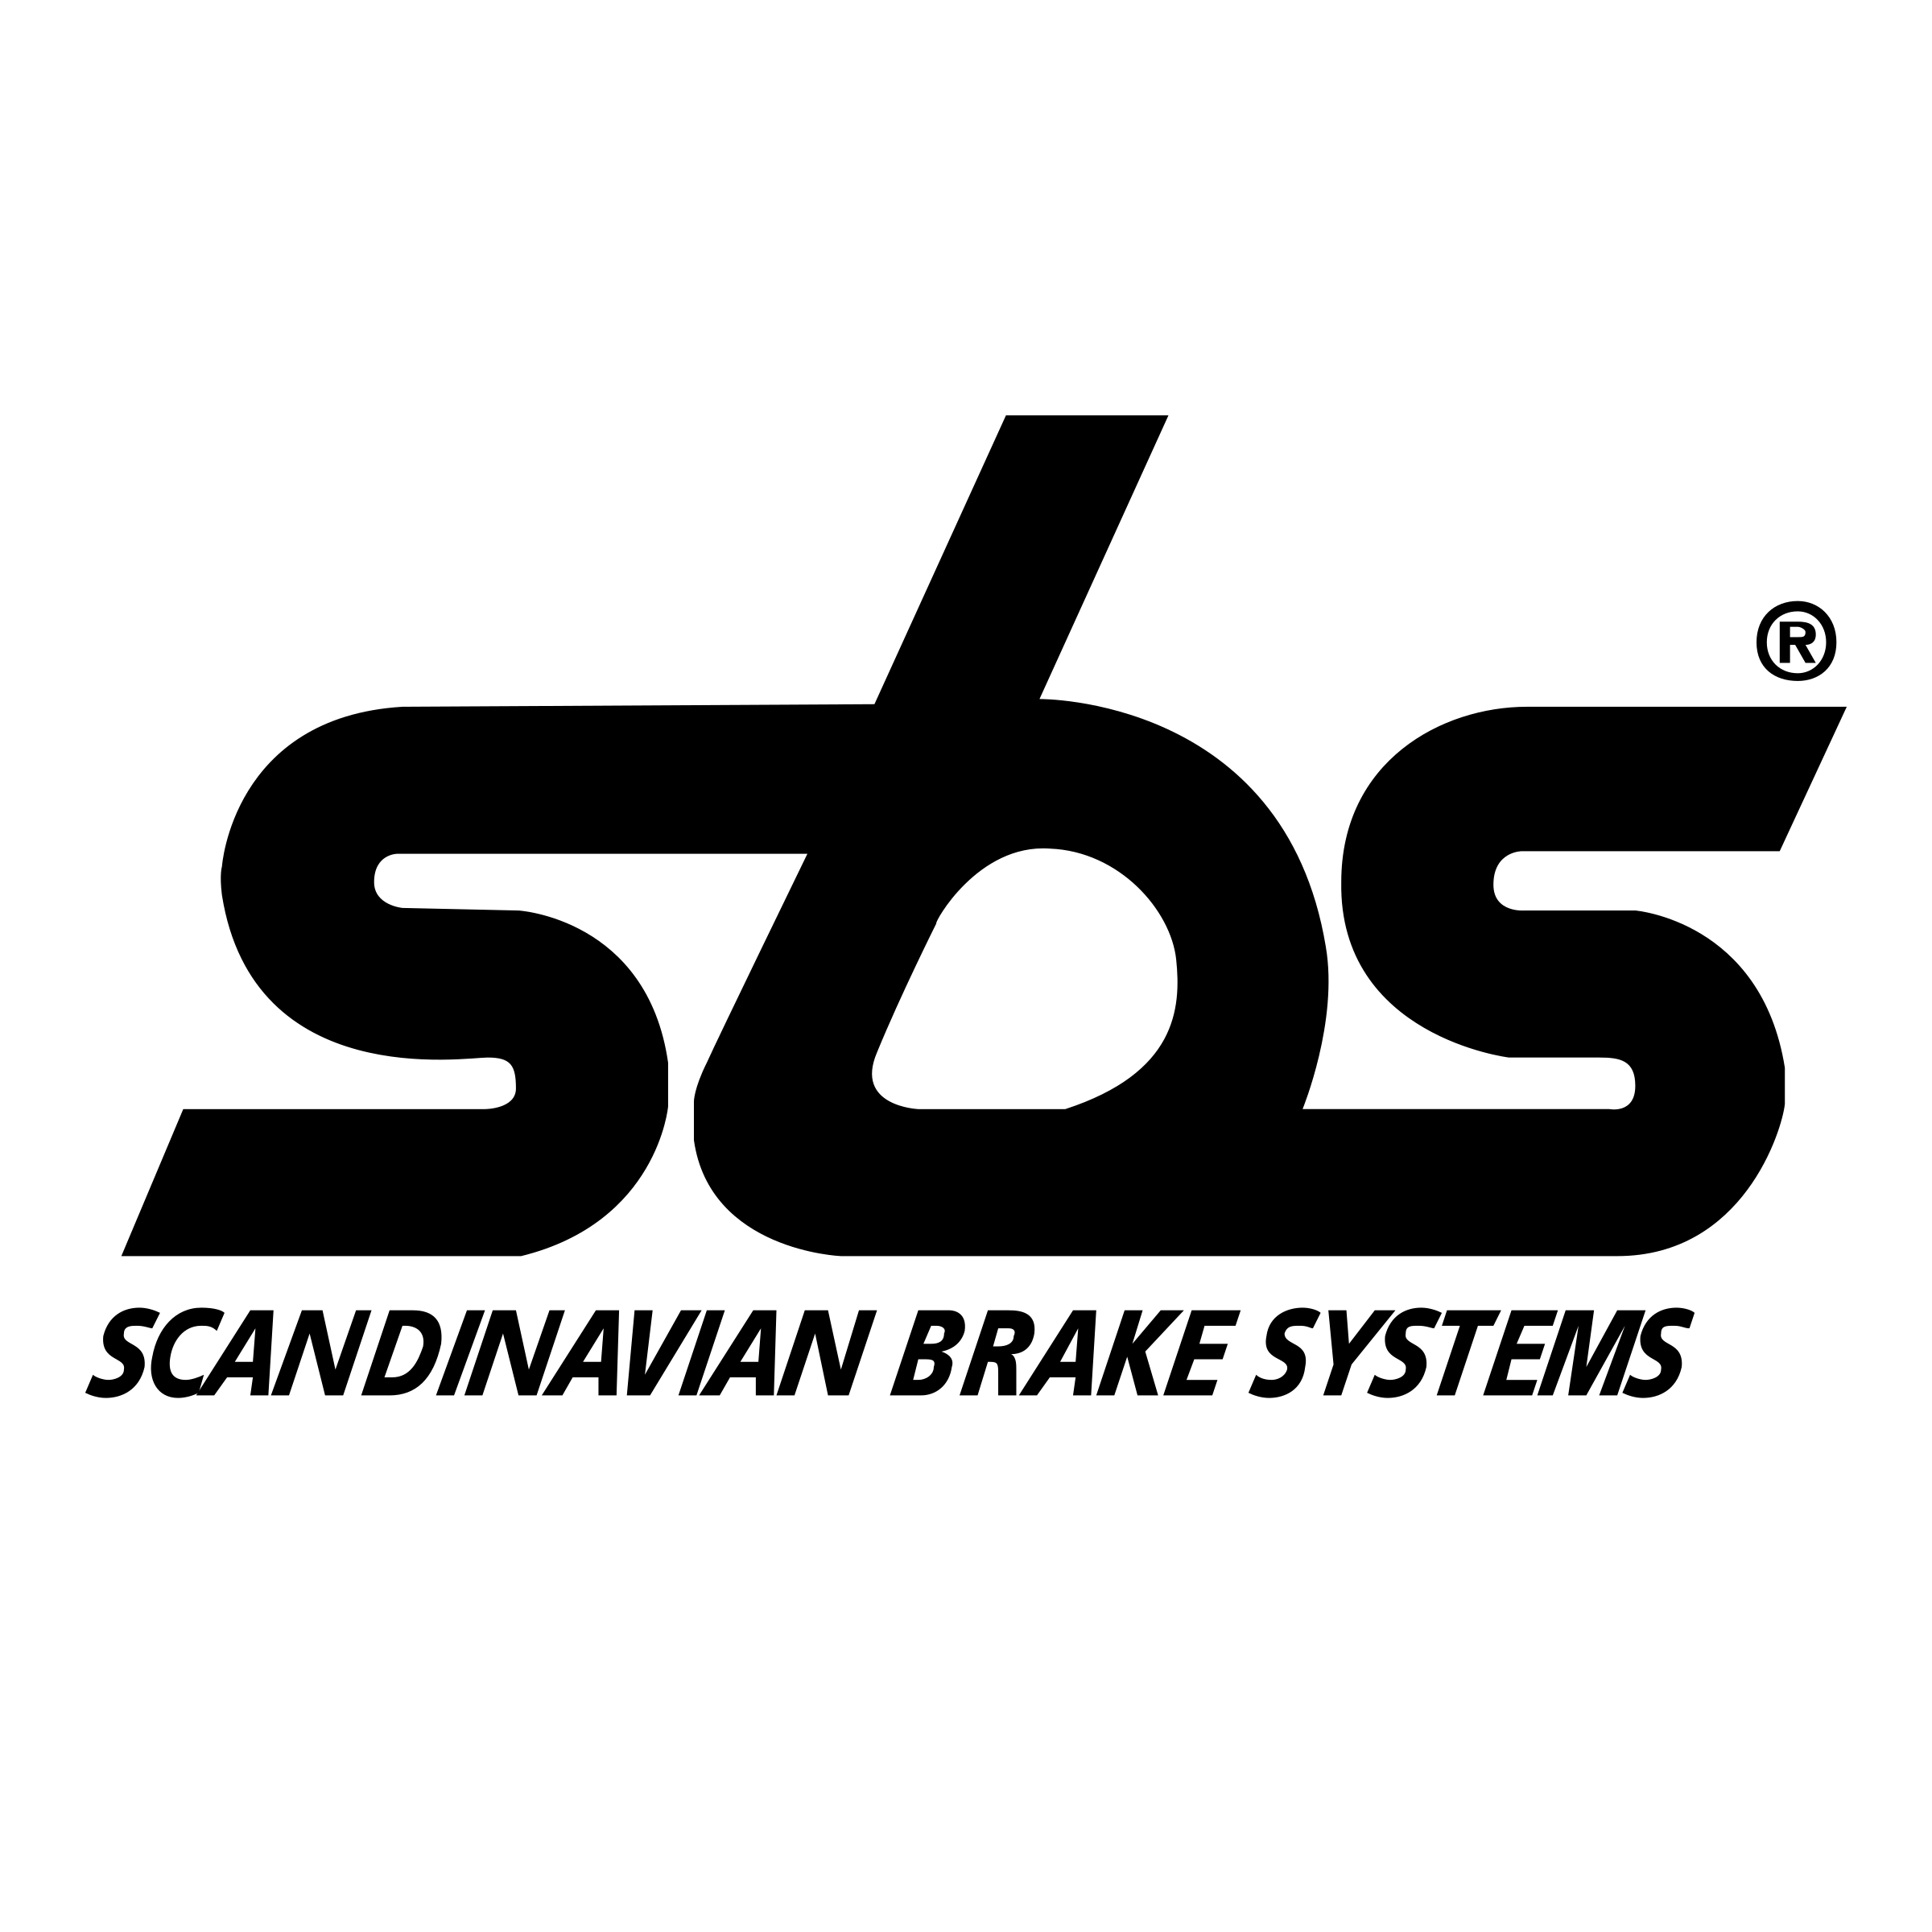 SBS Logo - SBS Logo PNG Transparent & SVG Vector - Freebie Supply